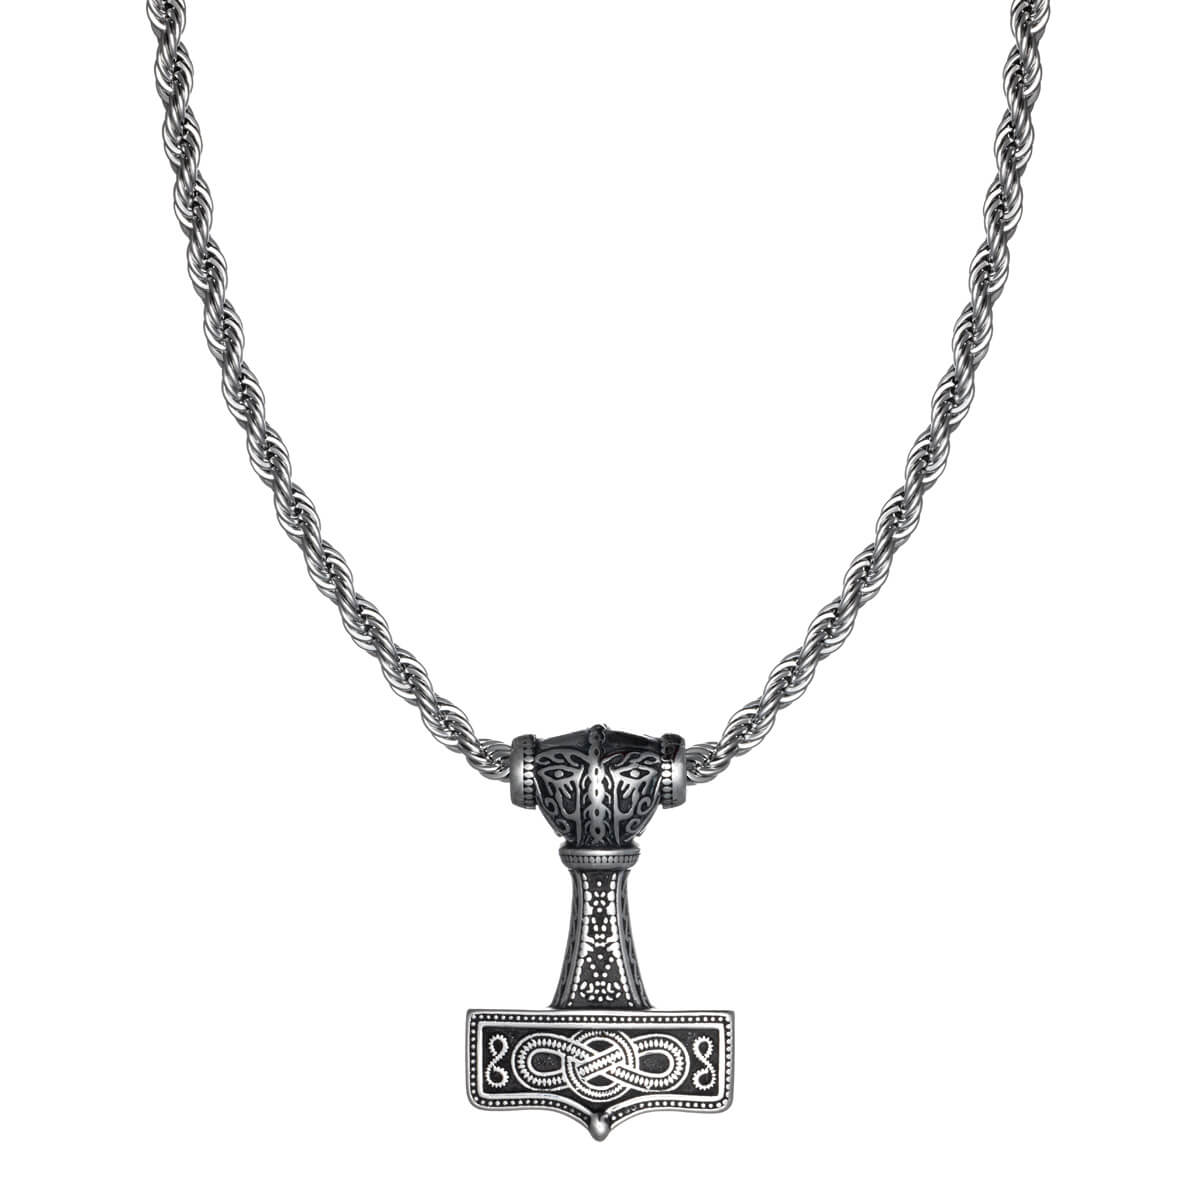 Hammer pendant necklace steel bracelet 55cm (Steel 316L)